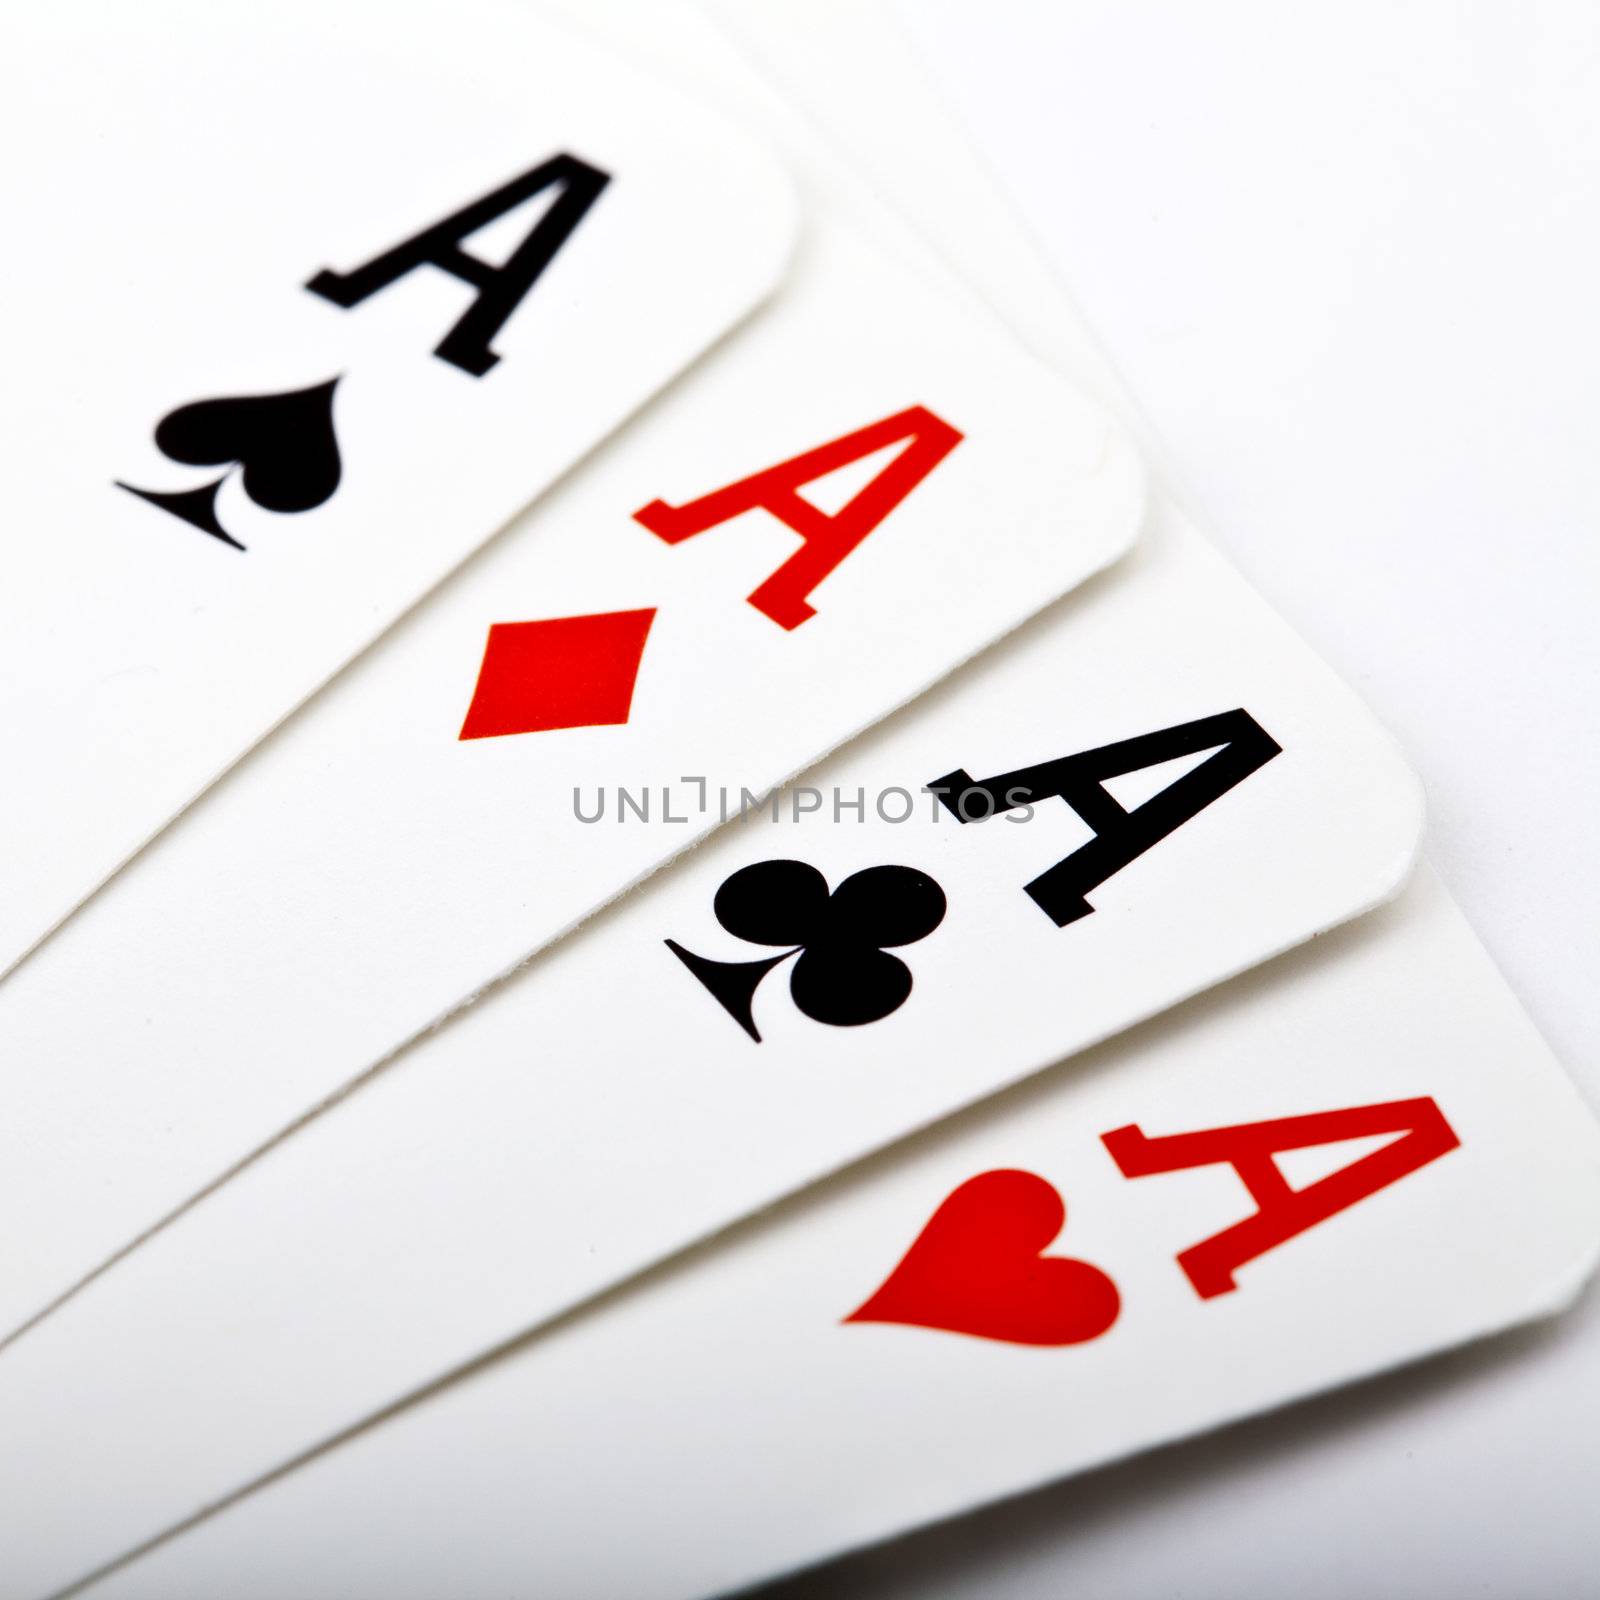 Four Aces by chrisdorney